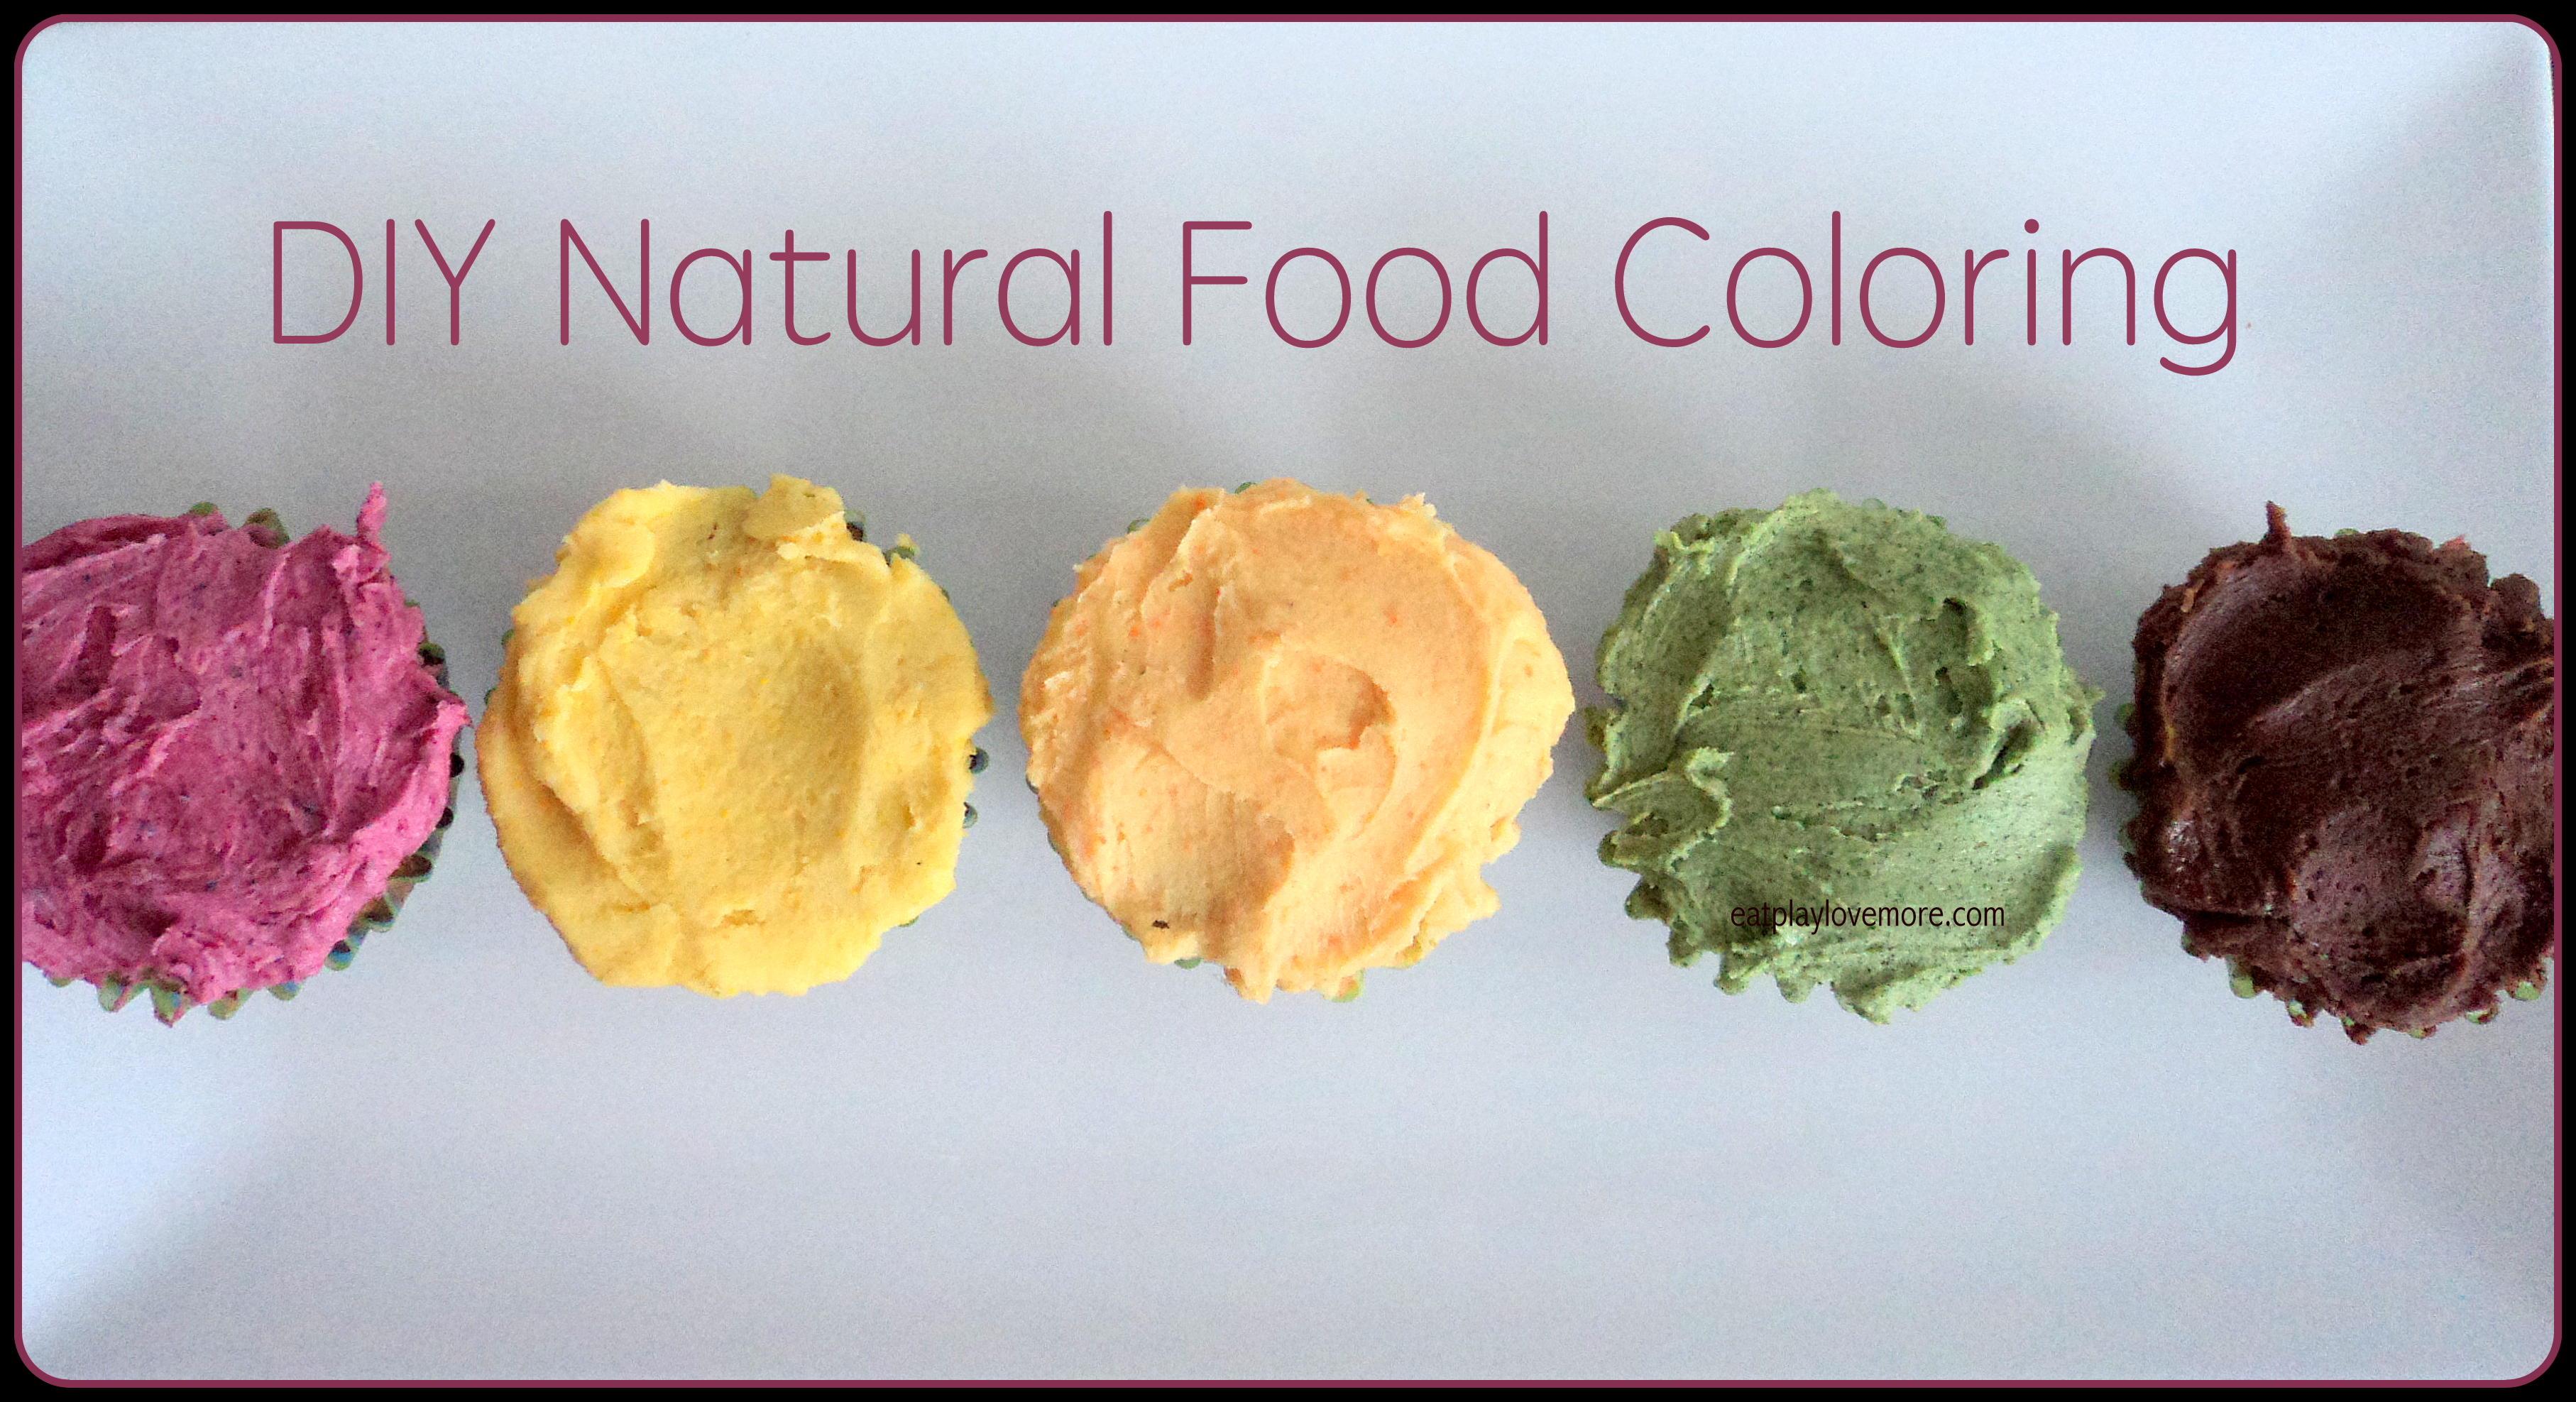 How to make natural food coloring